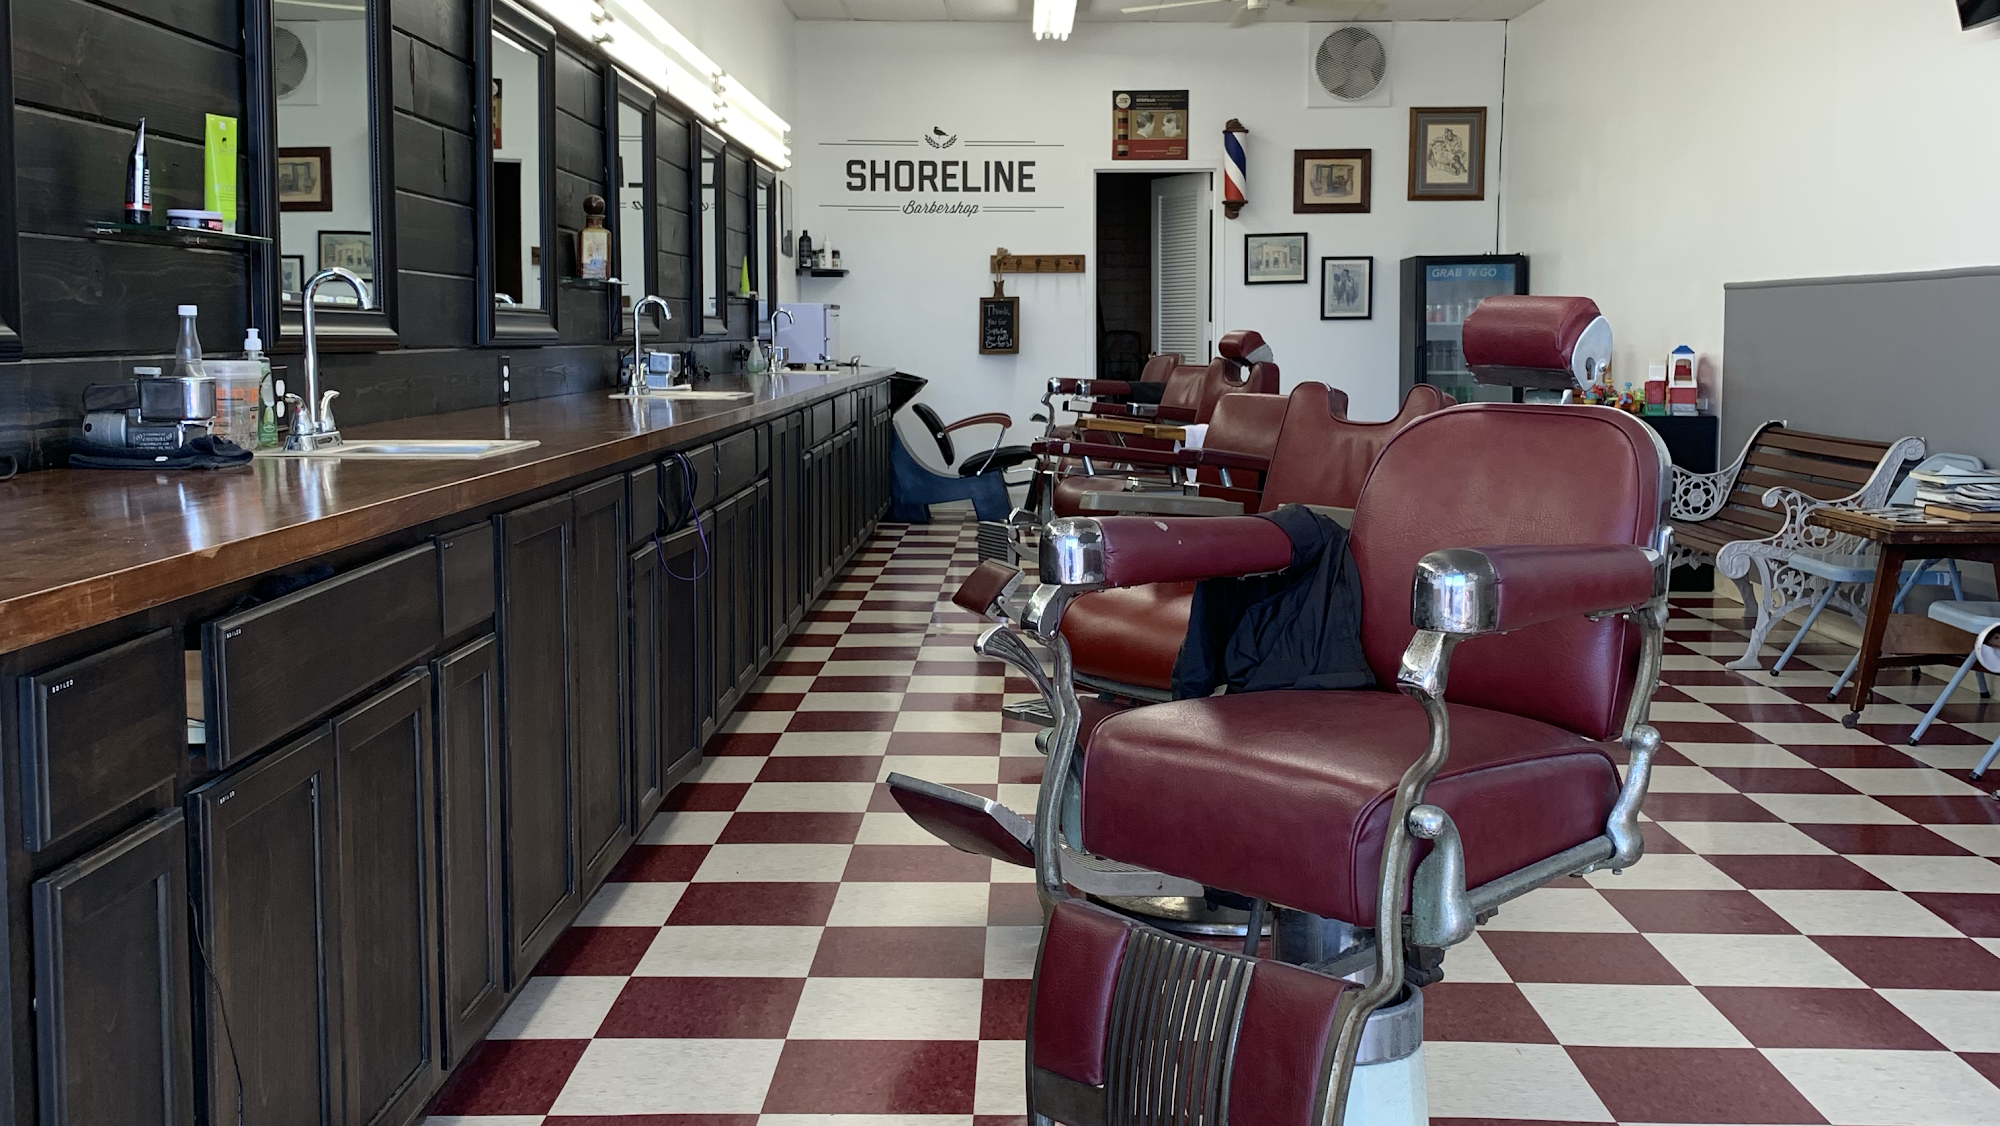 Shoreline Barbershop